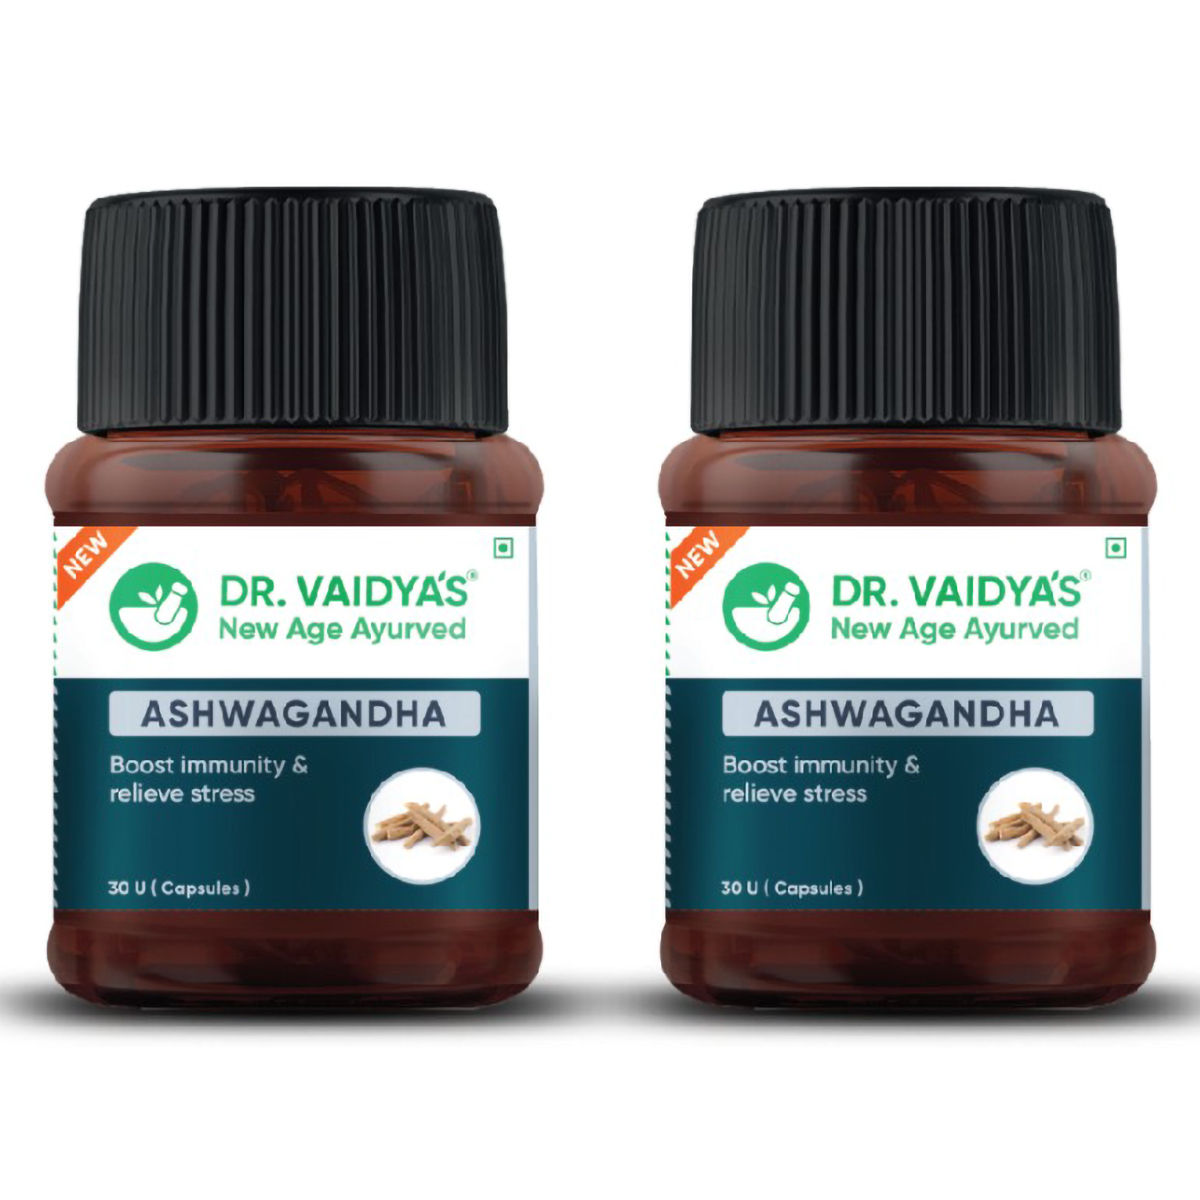 Buy Dr. Vaidya's Ashwagandha Immunity Enhancer, 60 Capsules (2 x 30 Capsules) Online